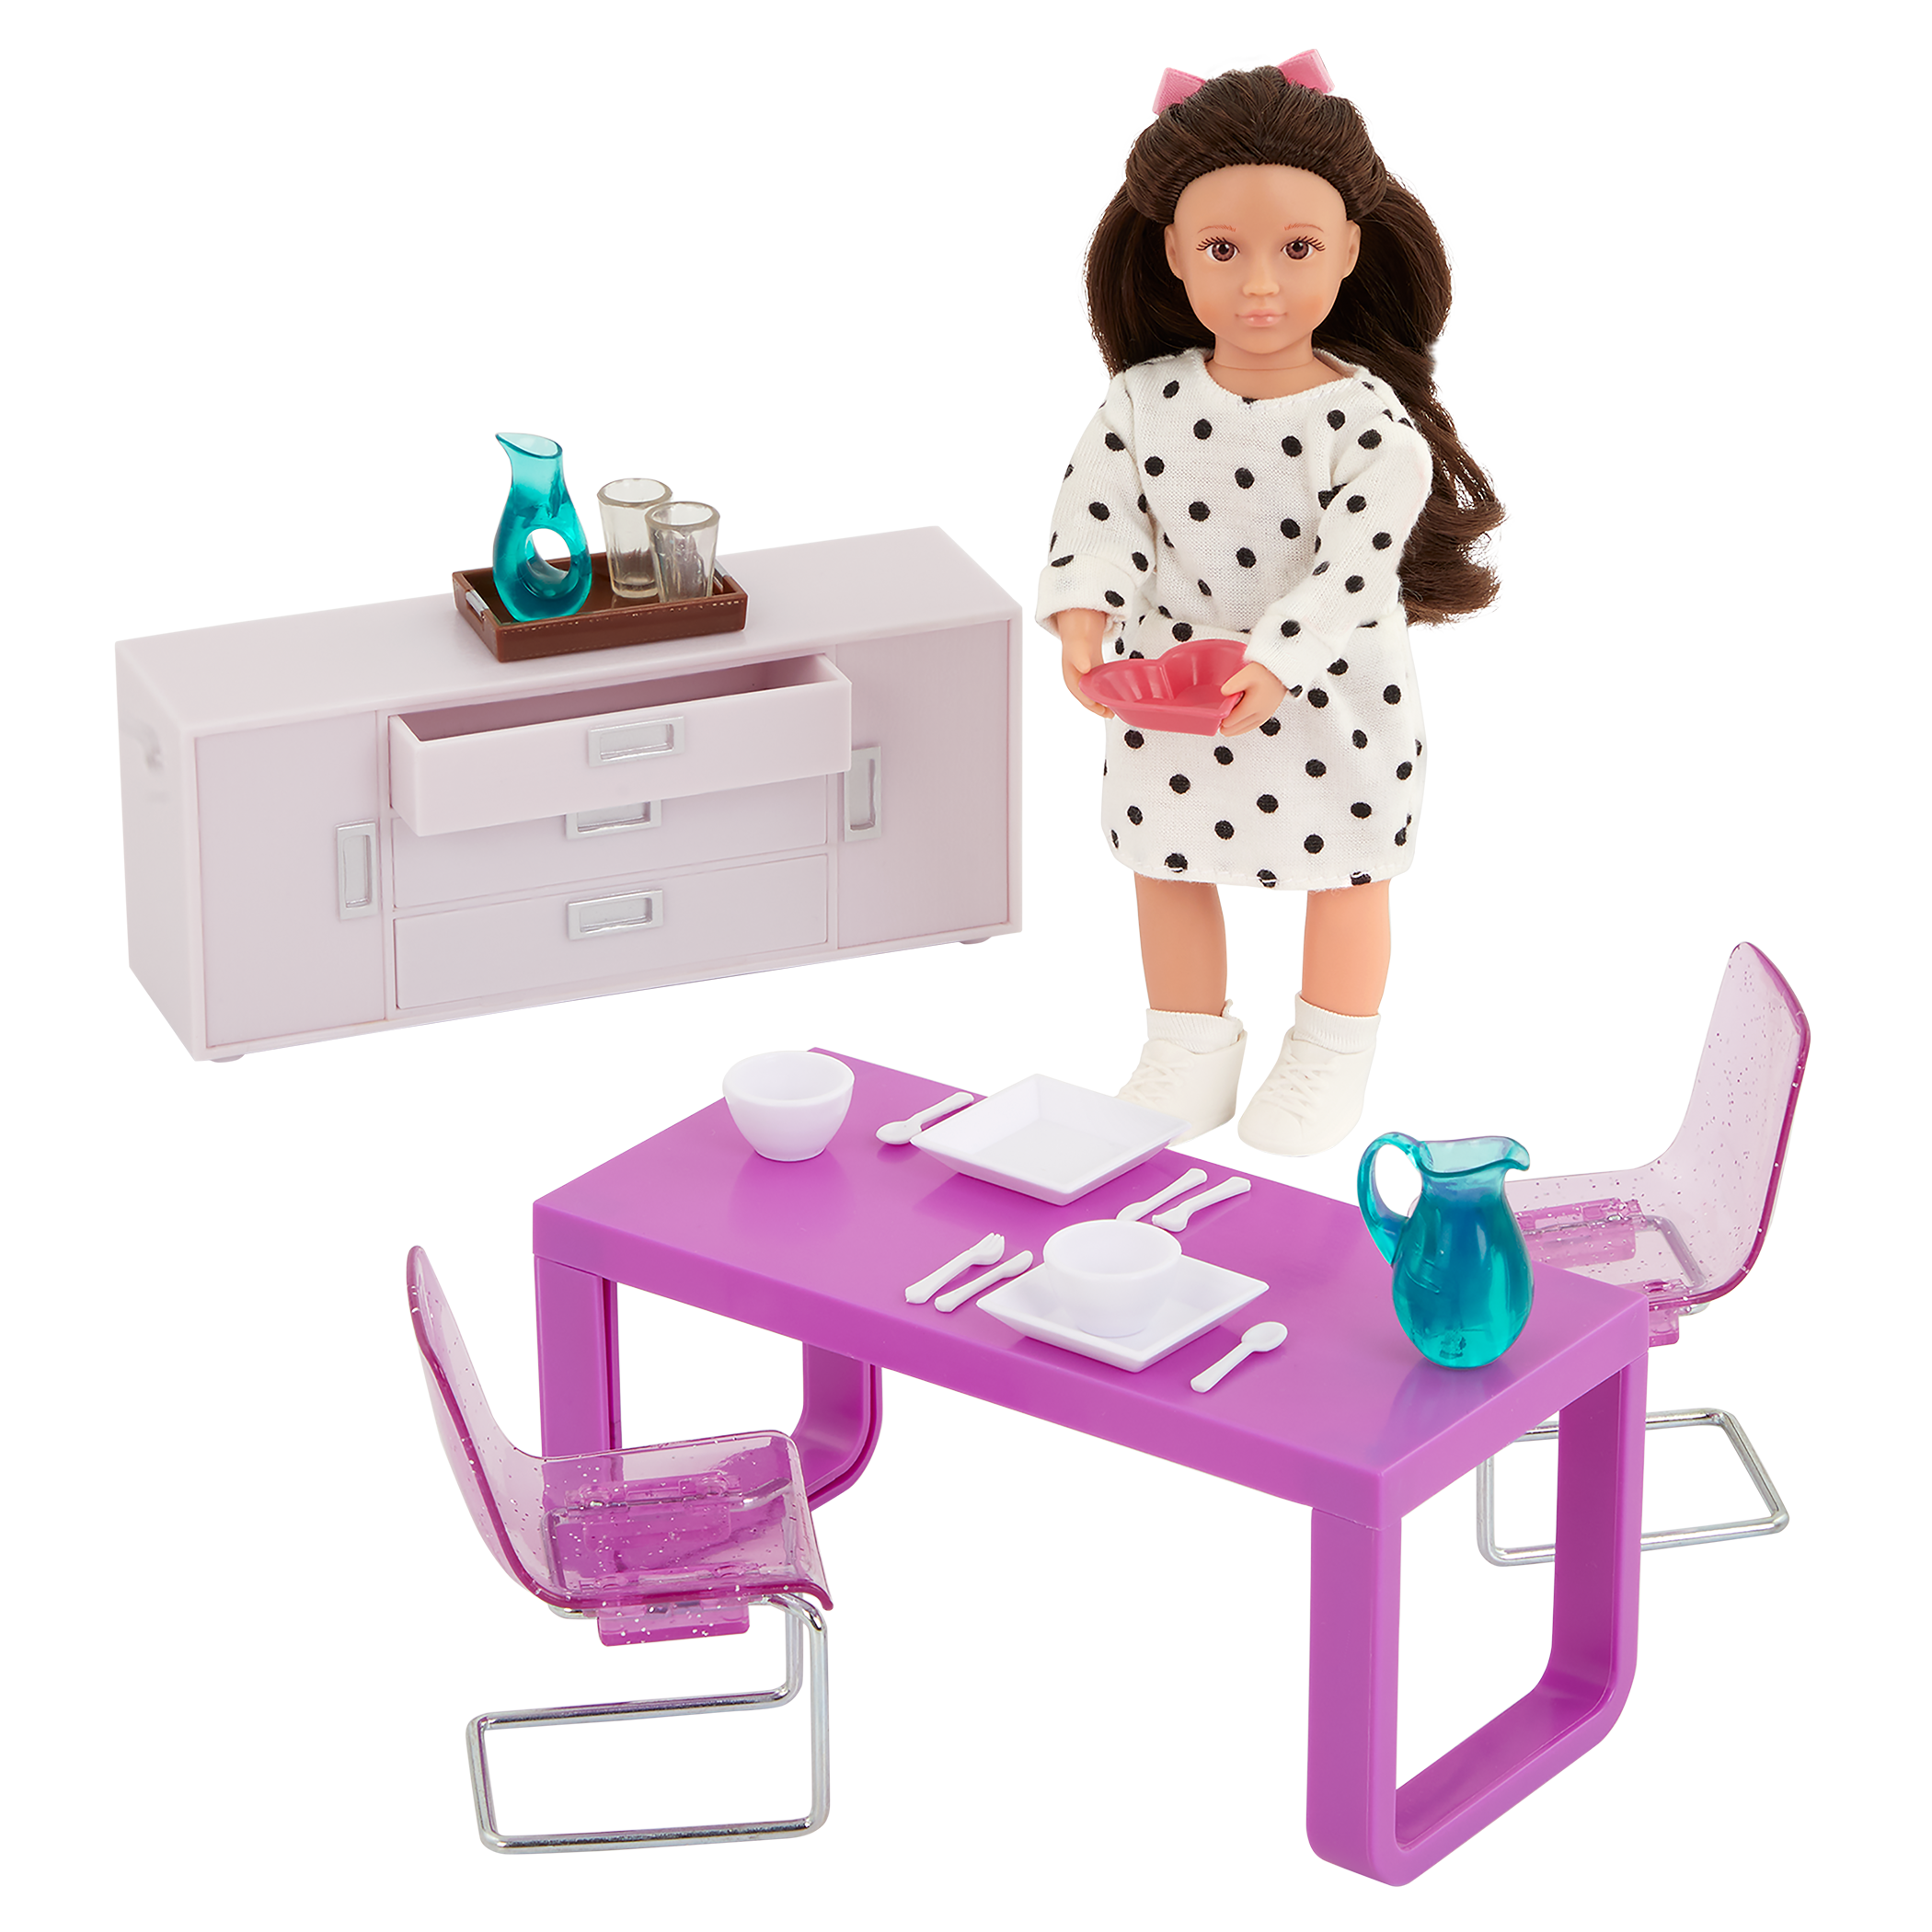 Amelia’s Dining Room Set | 6-inch Doll & Dollhouse Furniture | Lori